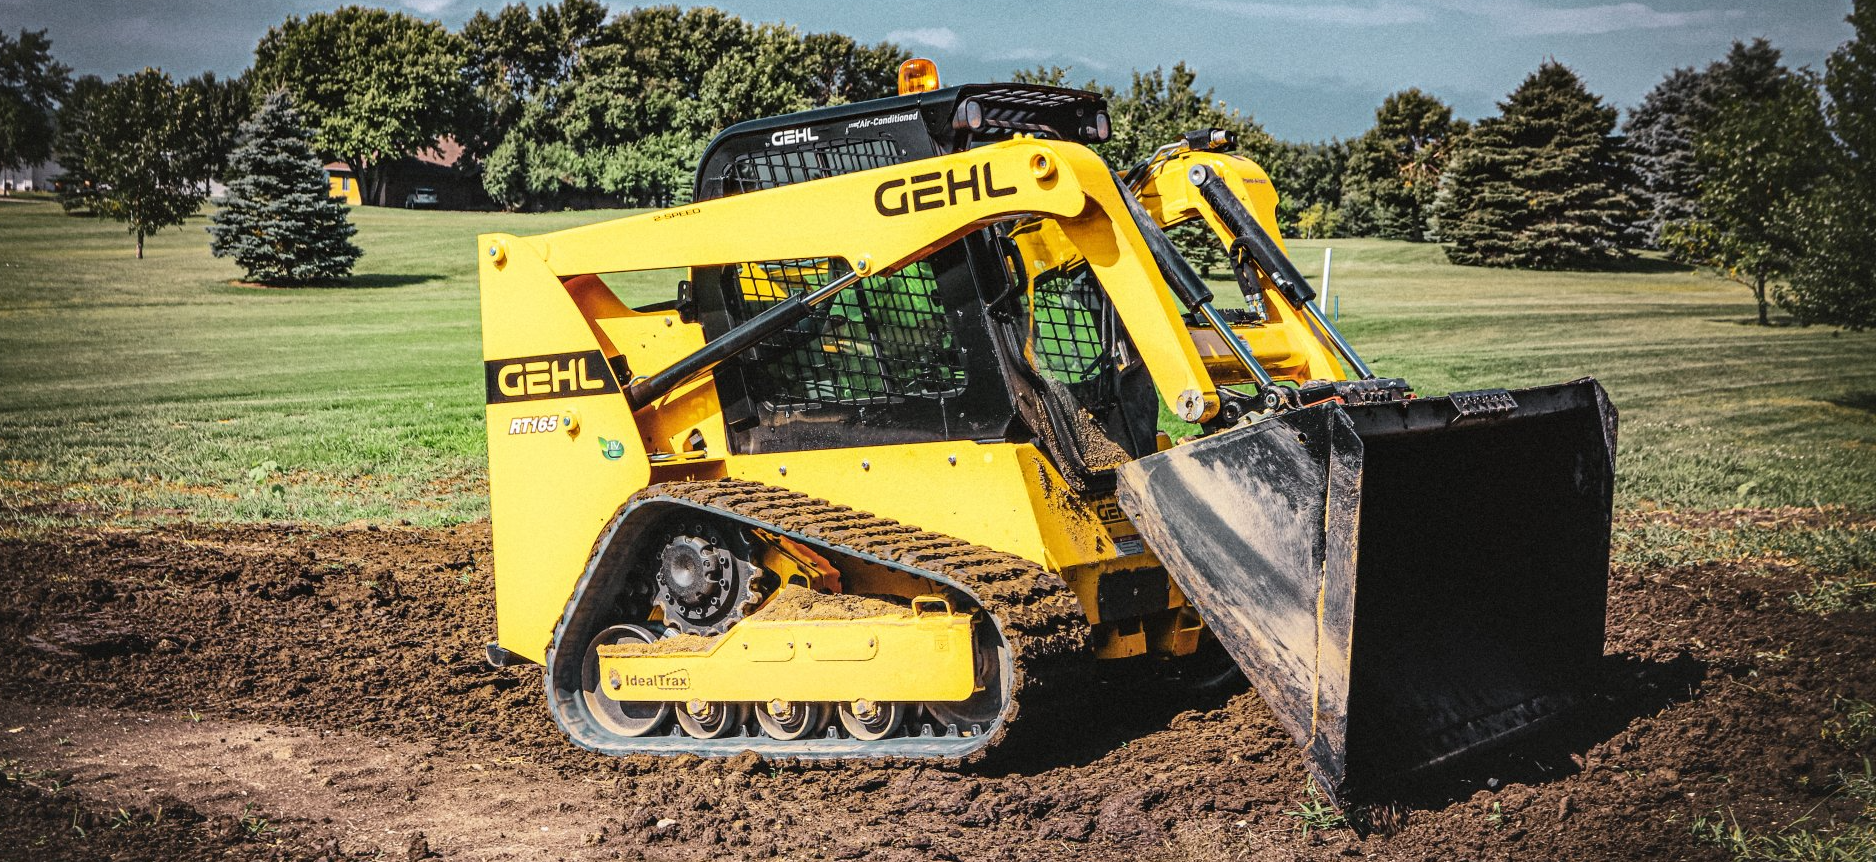 gehl rt165 track loader photo digging in dirt